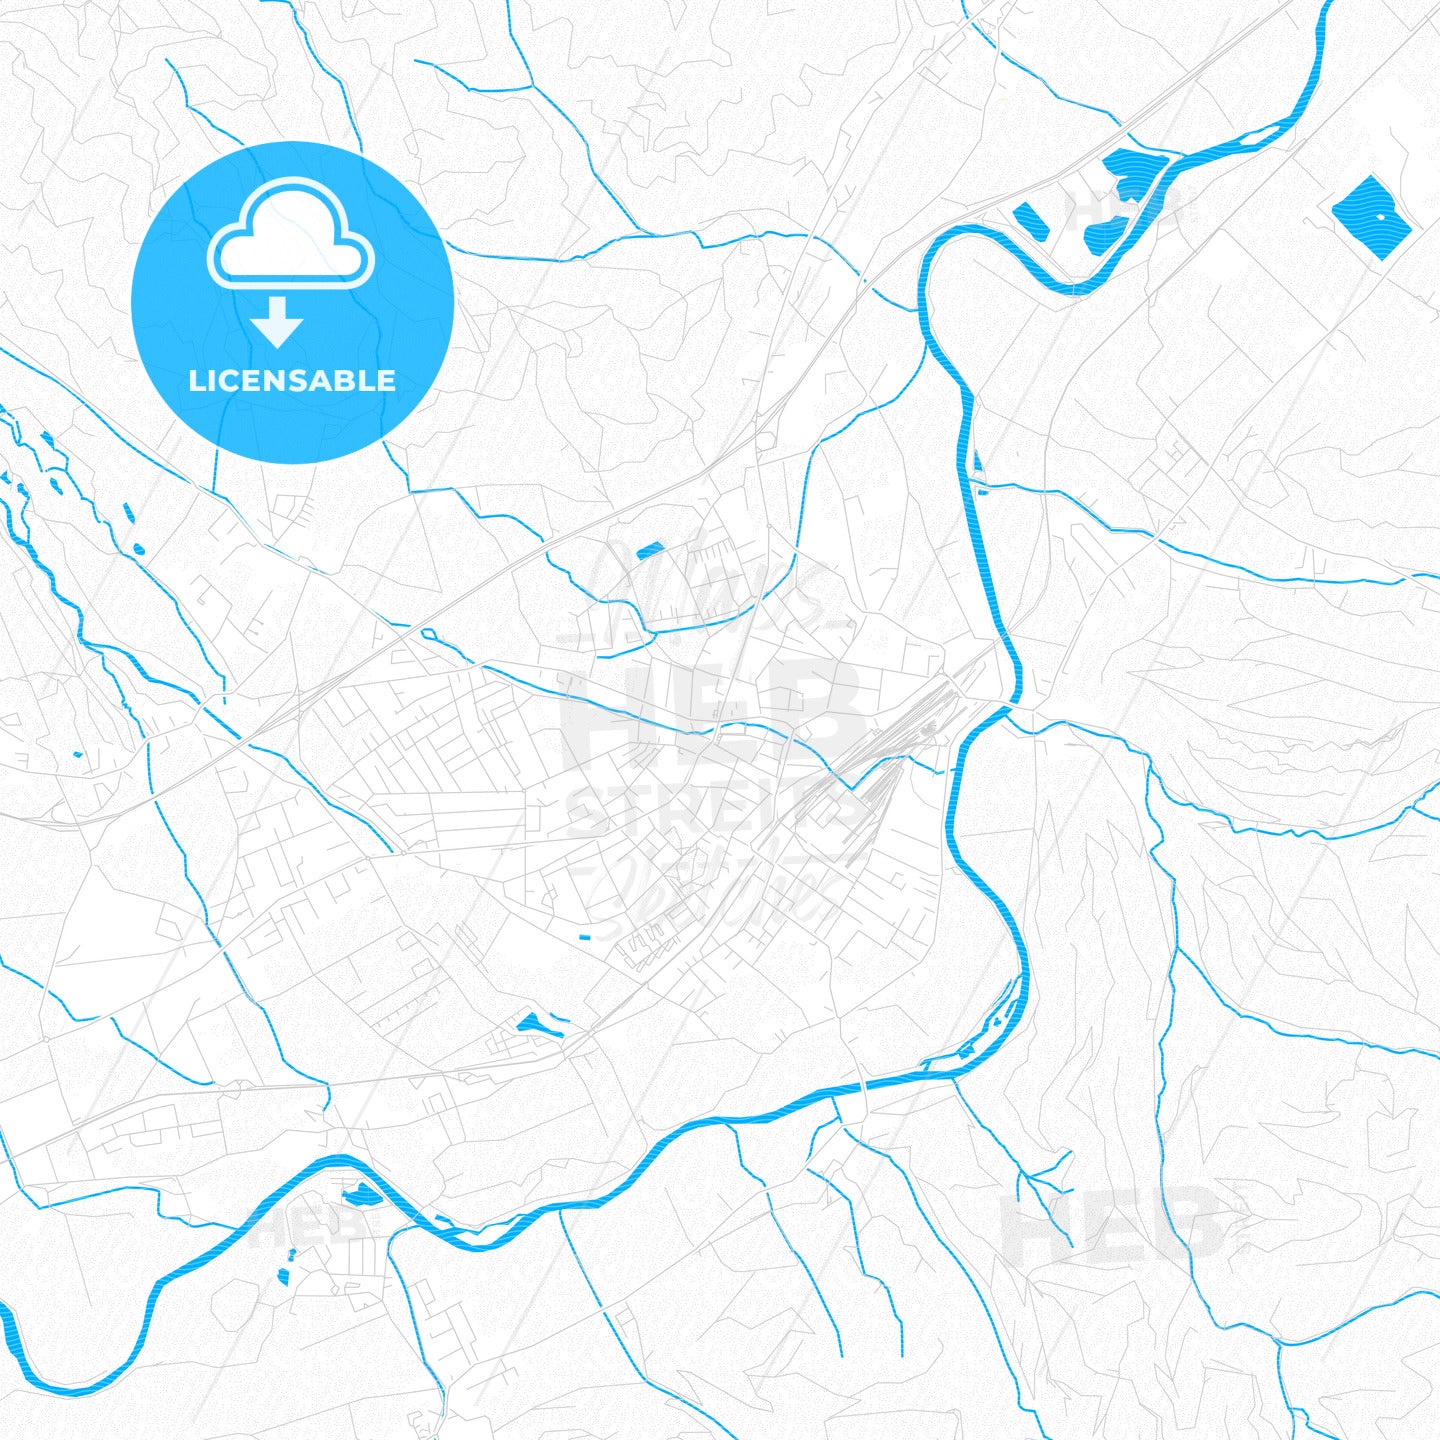 Knittelfeld, Austria PDF vector map with water in focus